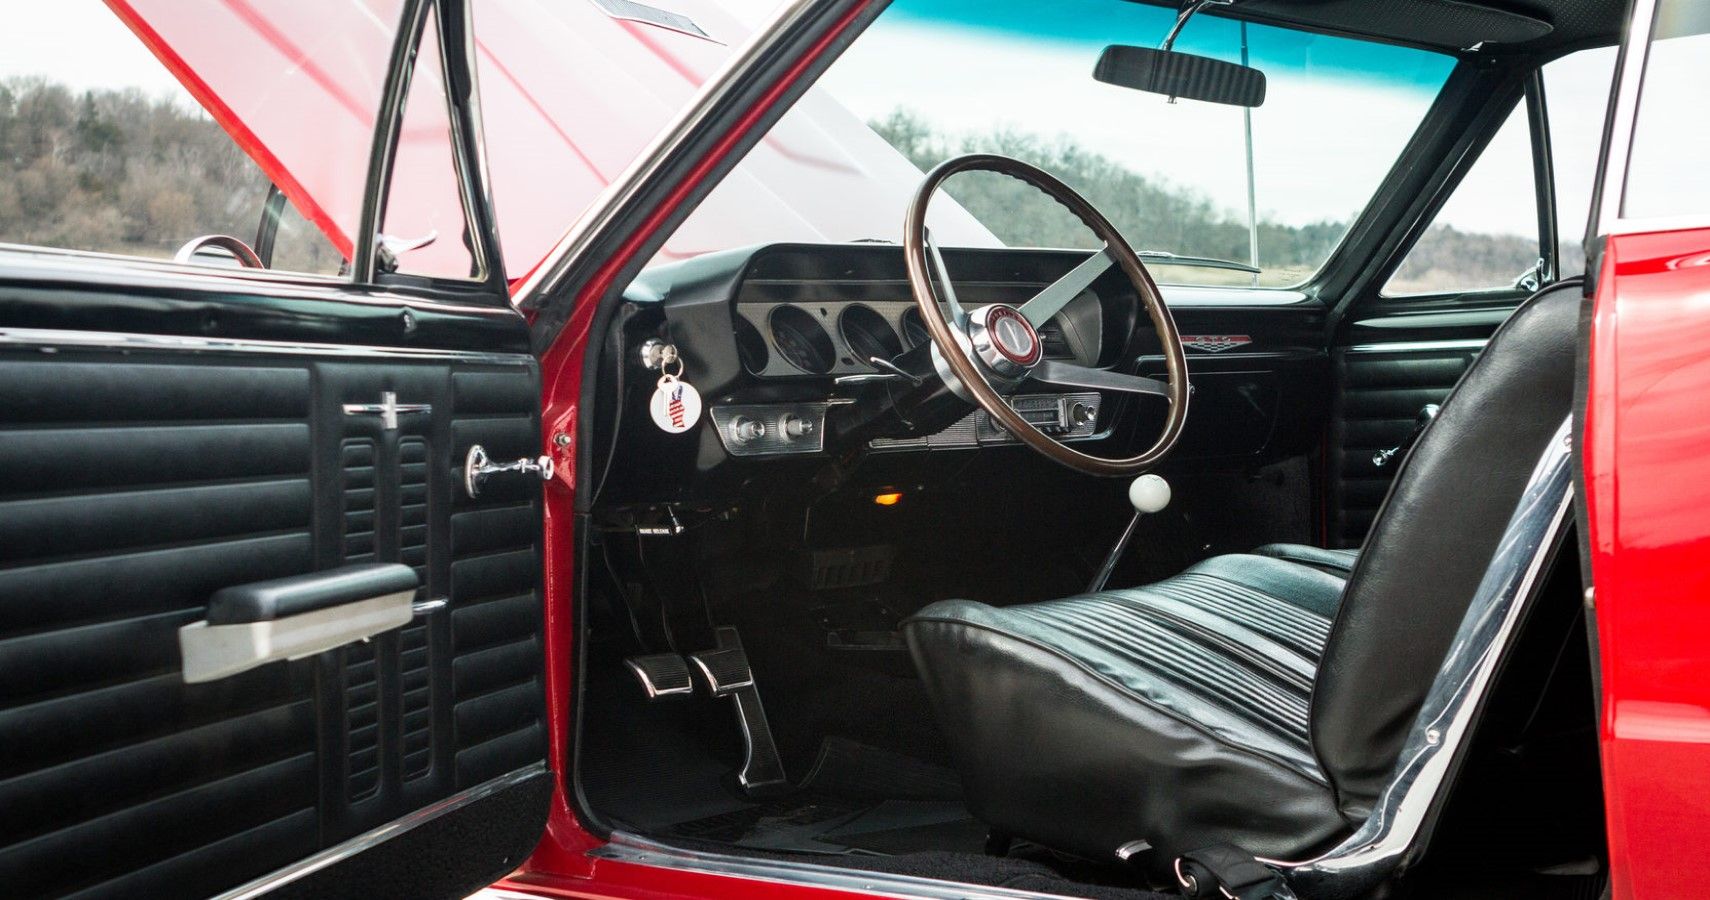 1964 Pontiac GTO interior view